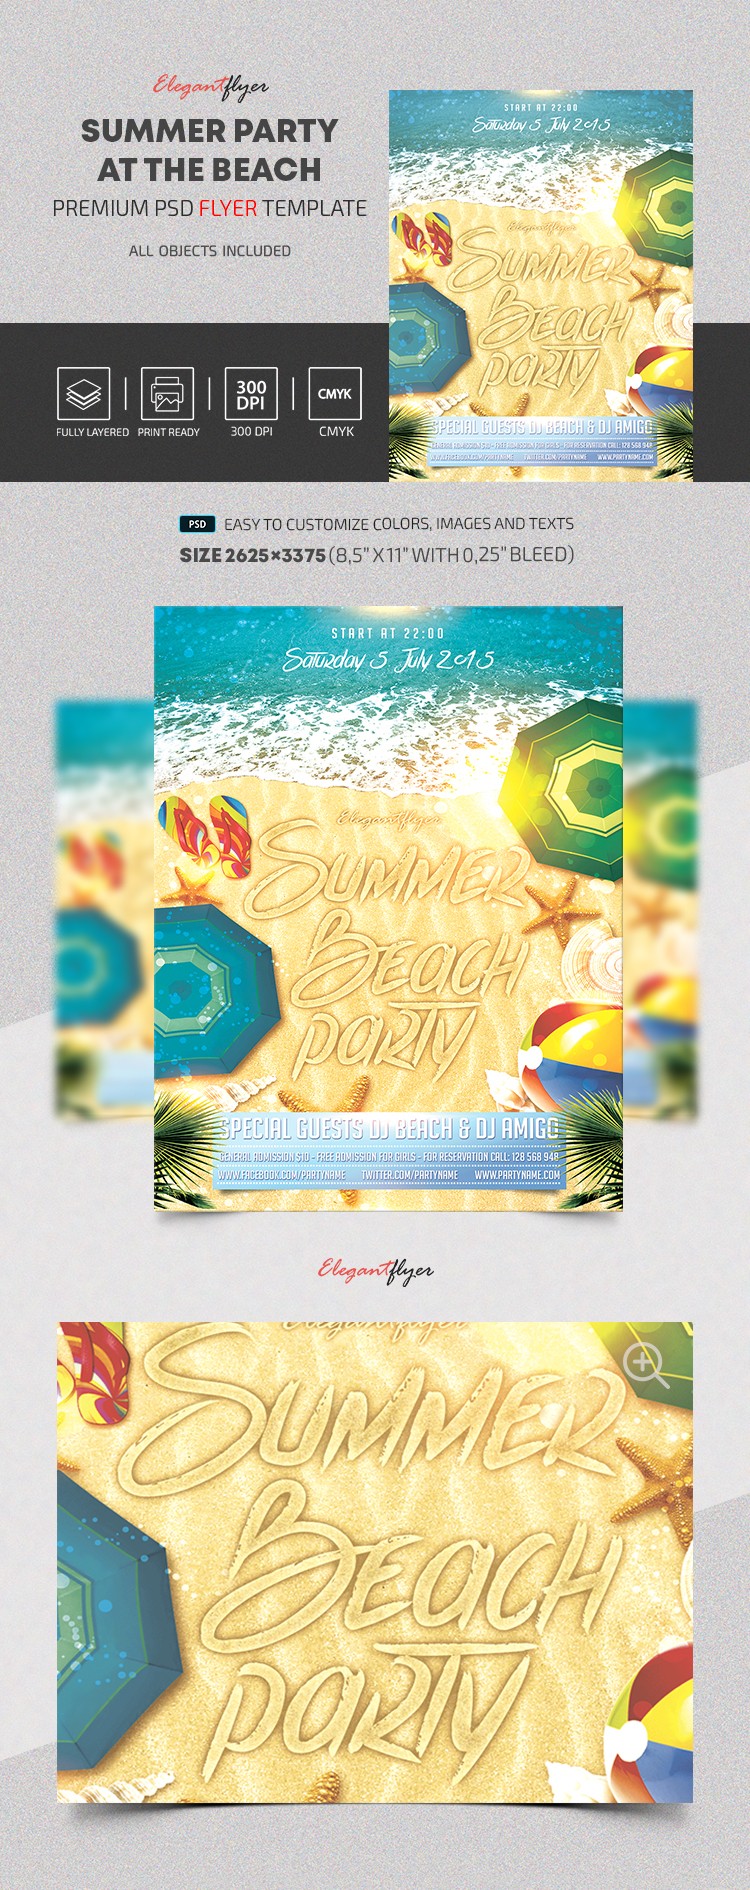 Impreza letnia na plaży V3 by ElegantFlyer